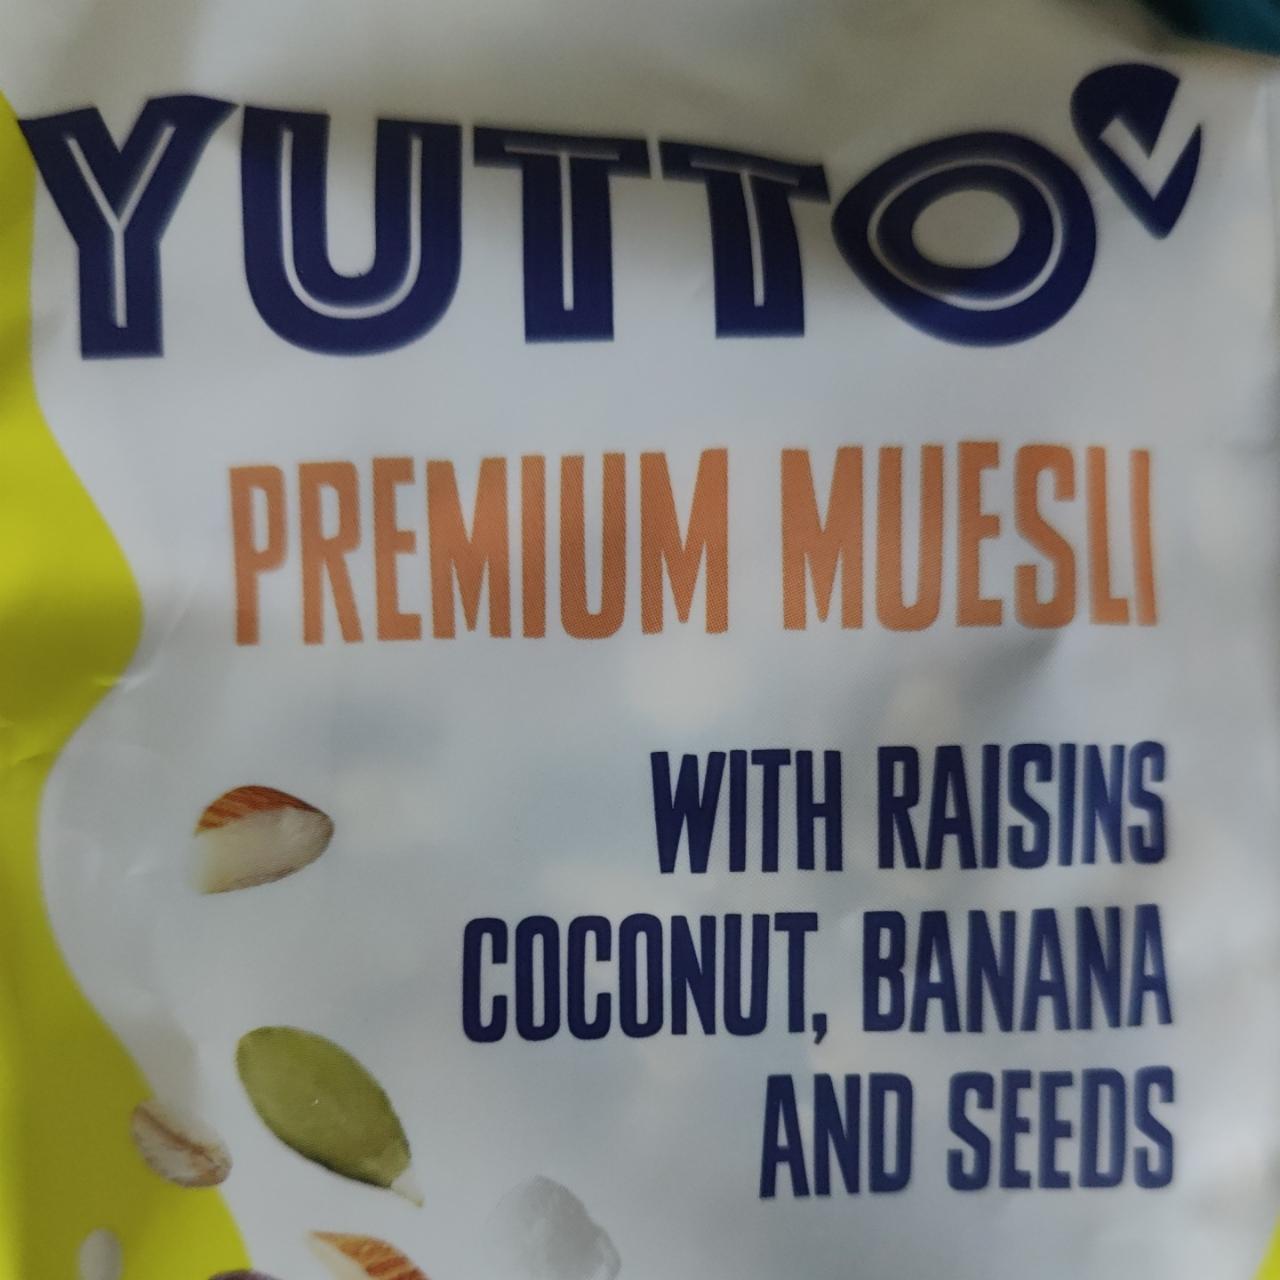 Képek - Premium Muesli with raisins, coconut, banana and seeds Yutto